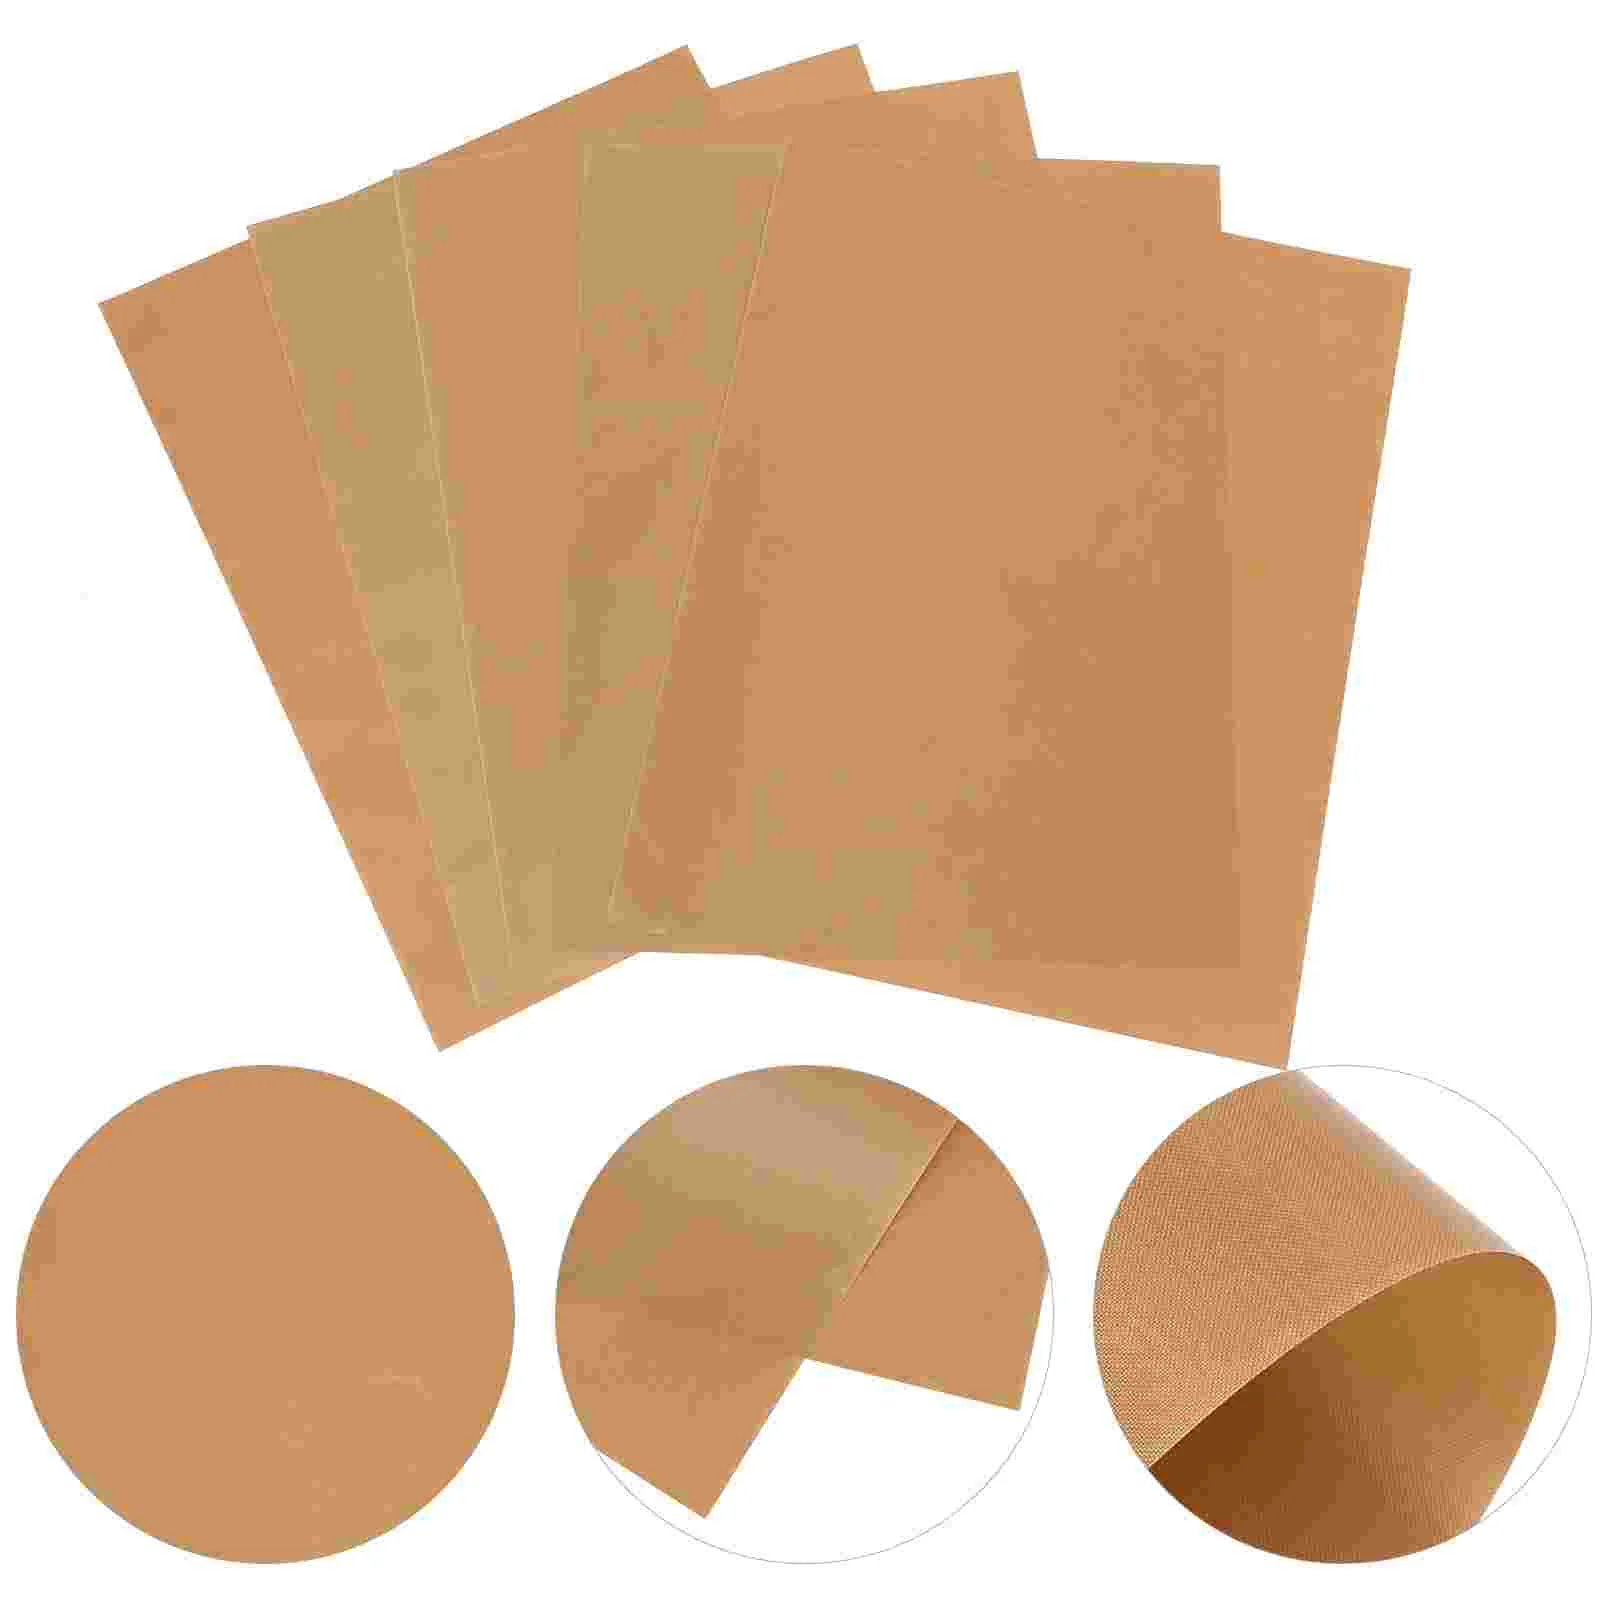 

5 Pcs The Bake Convenient Heat Press Mat Ironing Supplies Insulating Insulation Pad Home Supply